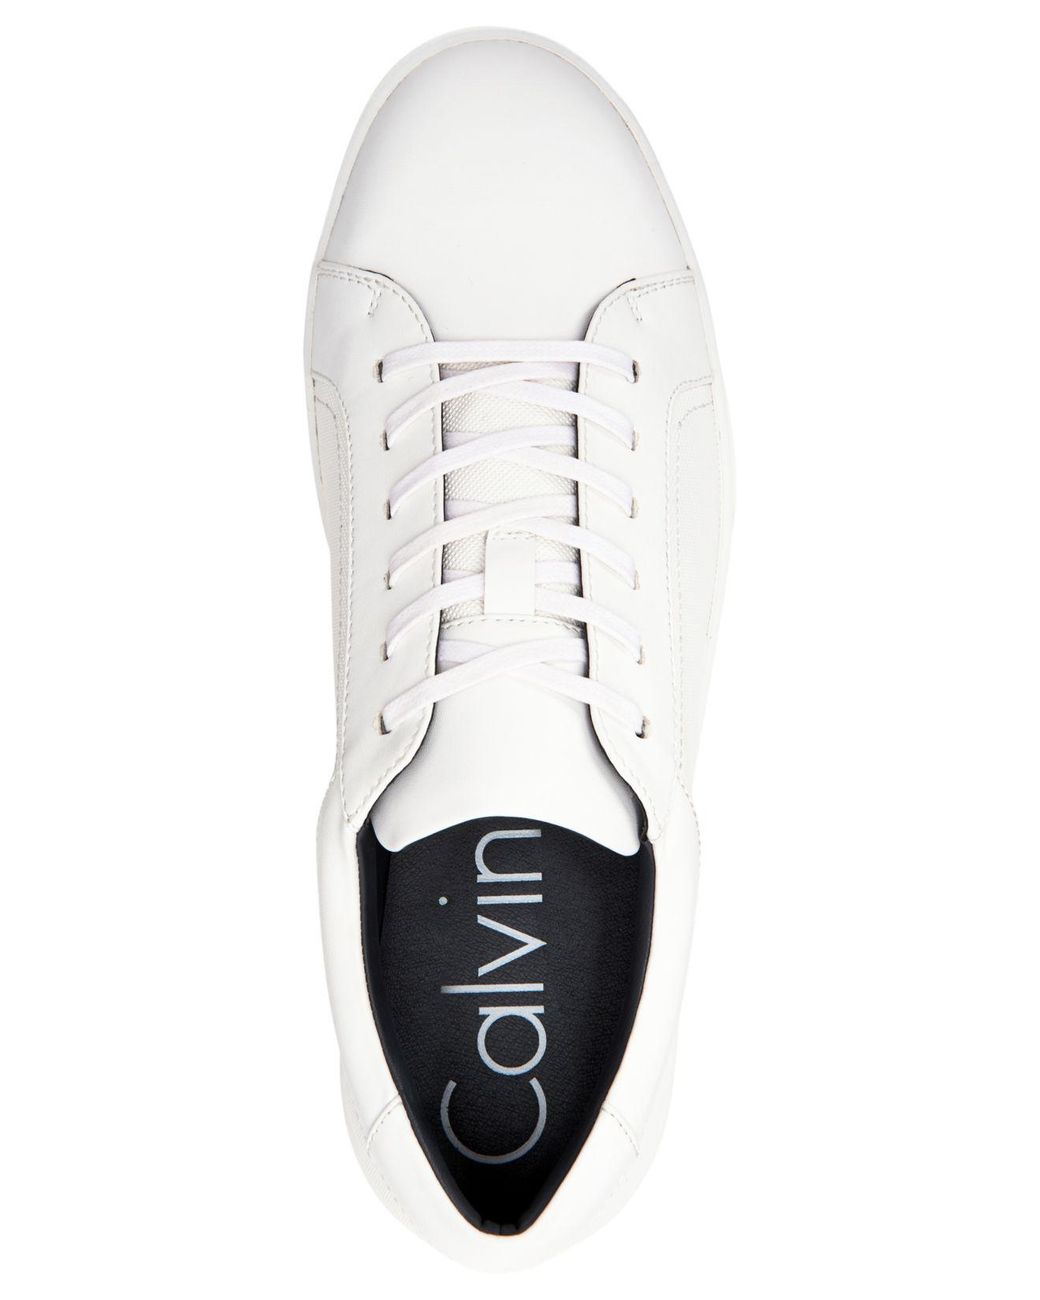 Calvin Klein Bowyer Diamond Sneakers in White for Men | Lyst